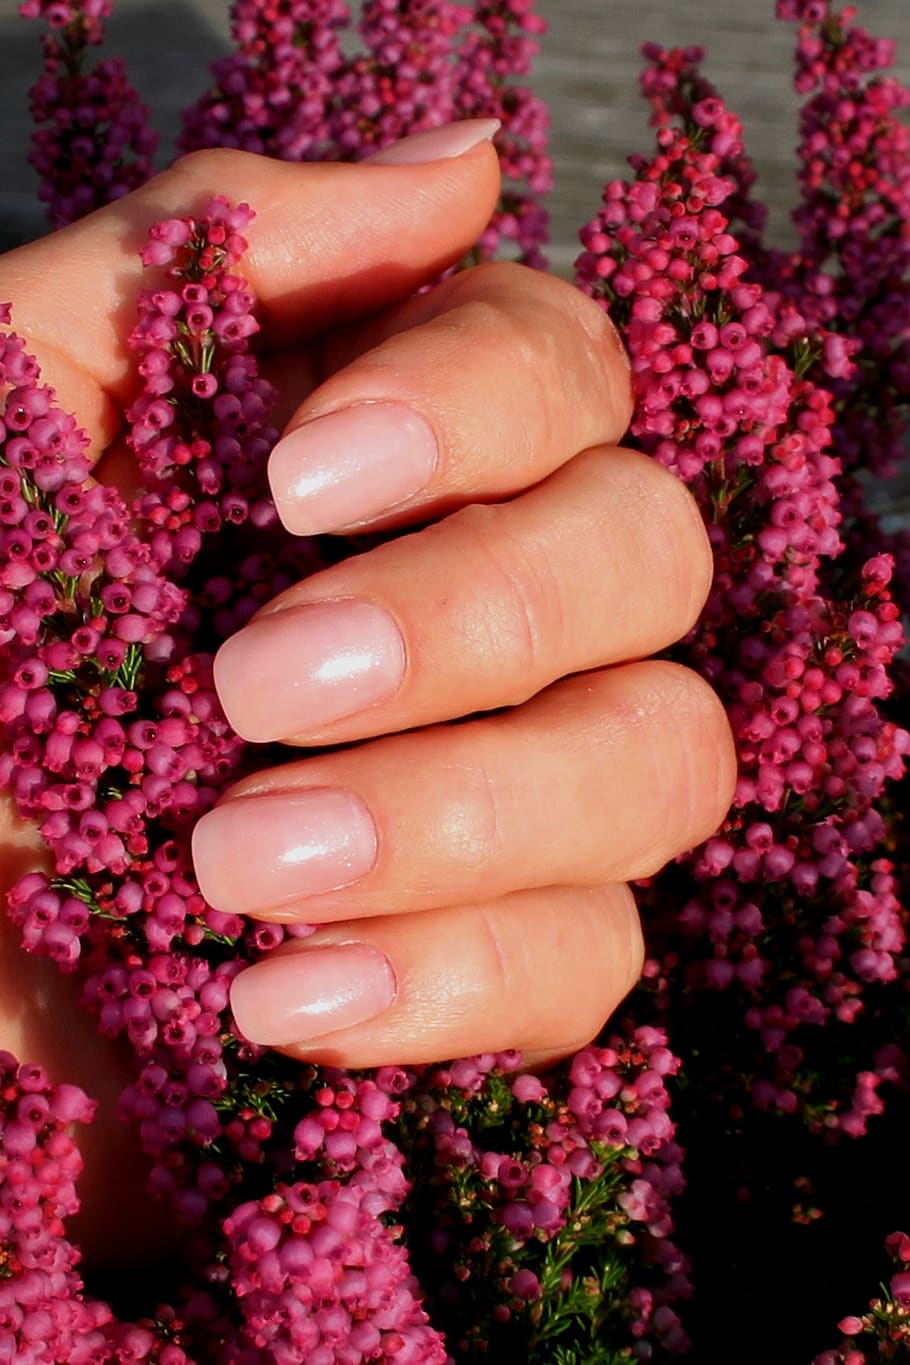 unhas, baby boomers, manicure, design de unhas, verniz para as unhas, flor, planta de florescência, cor rosa, mão humana, parte do corpo humano